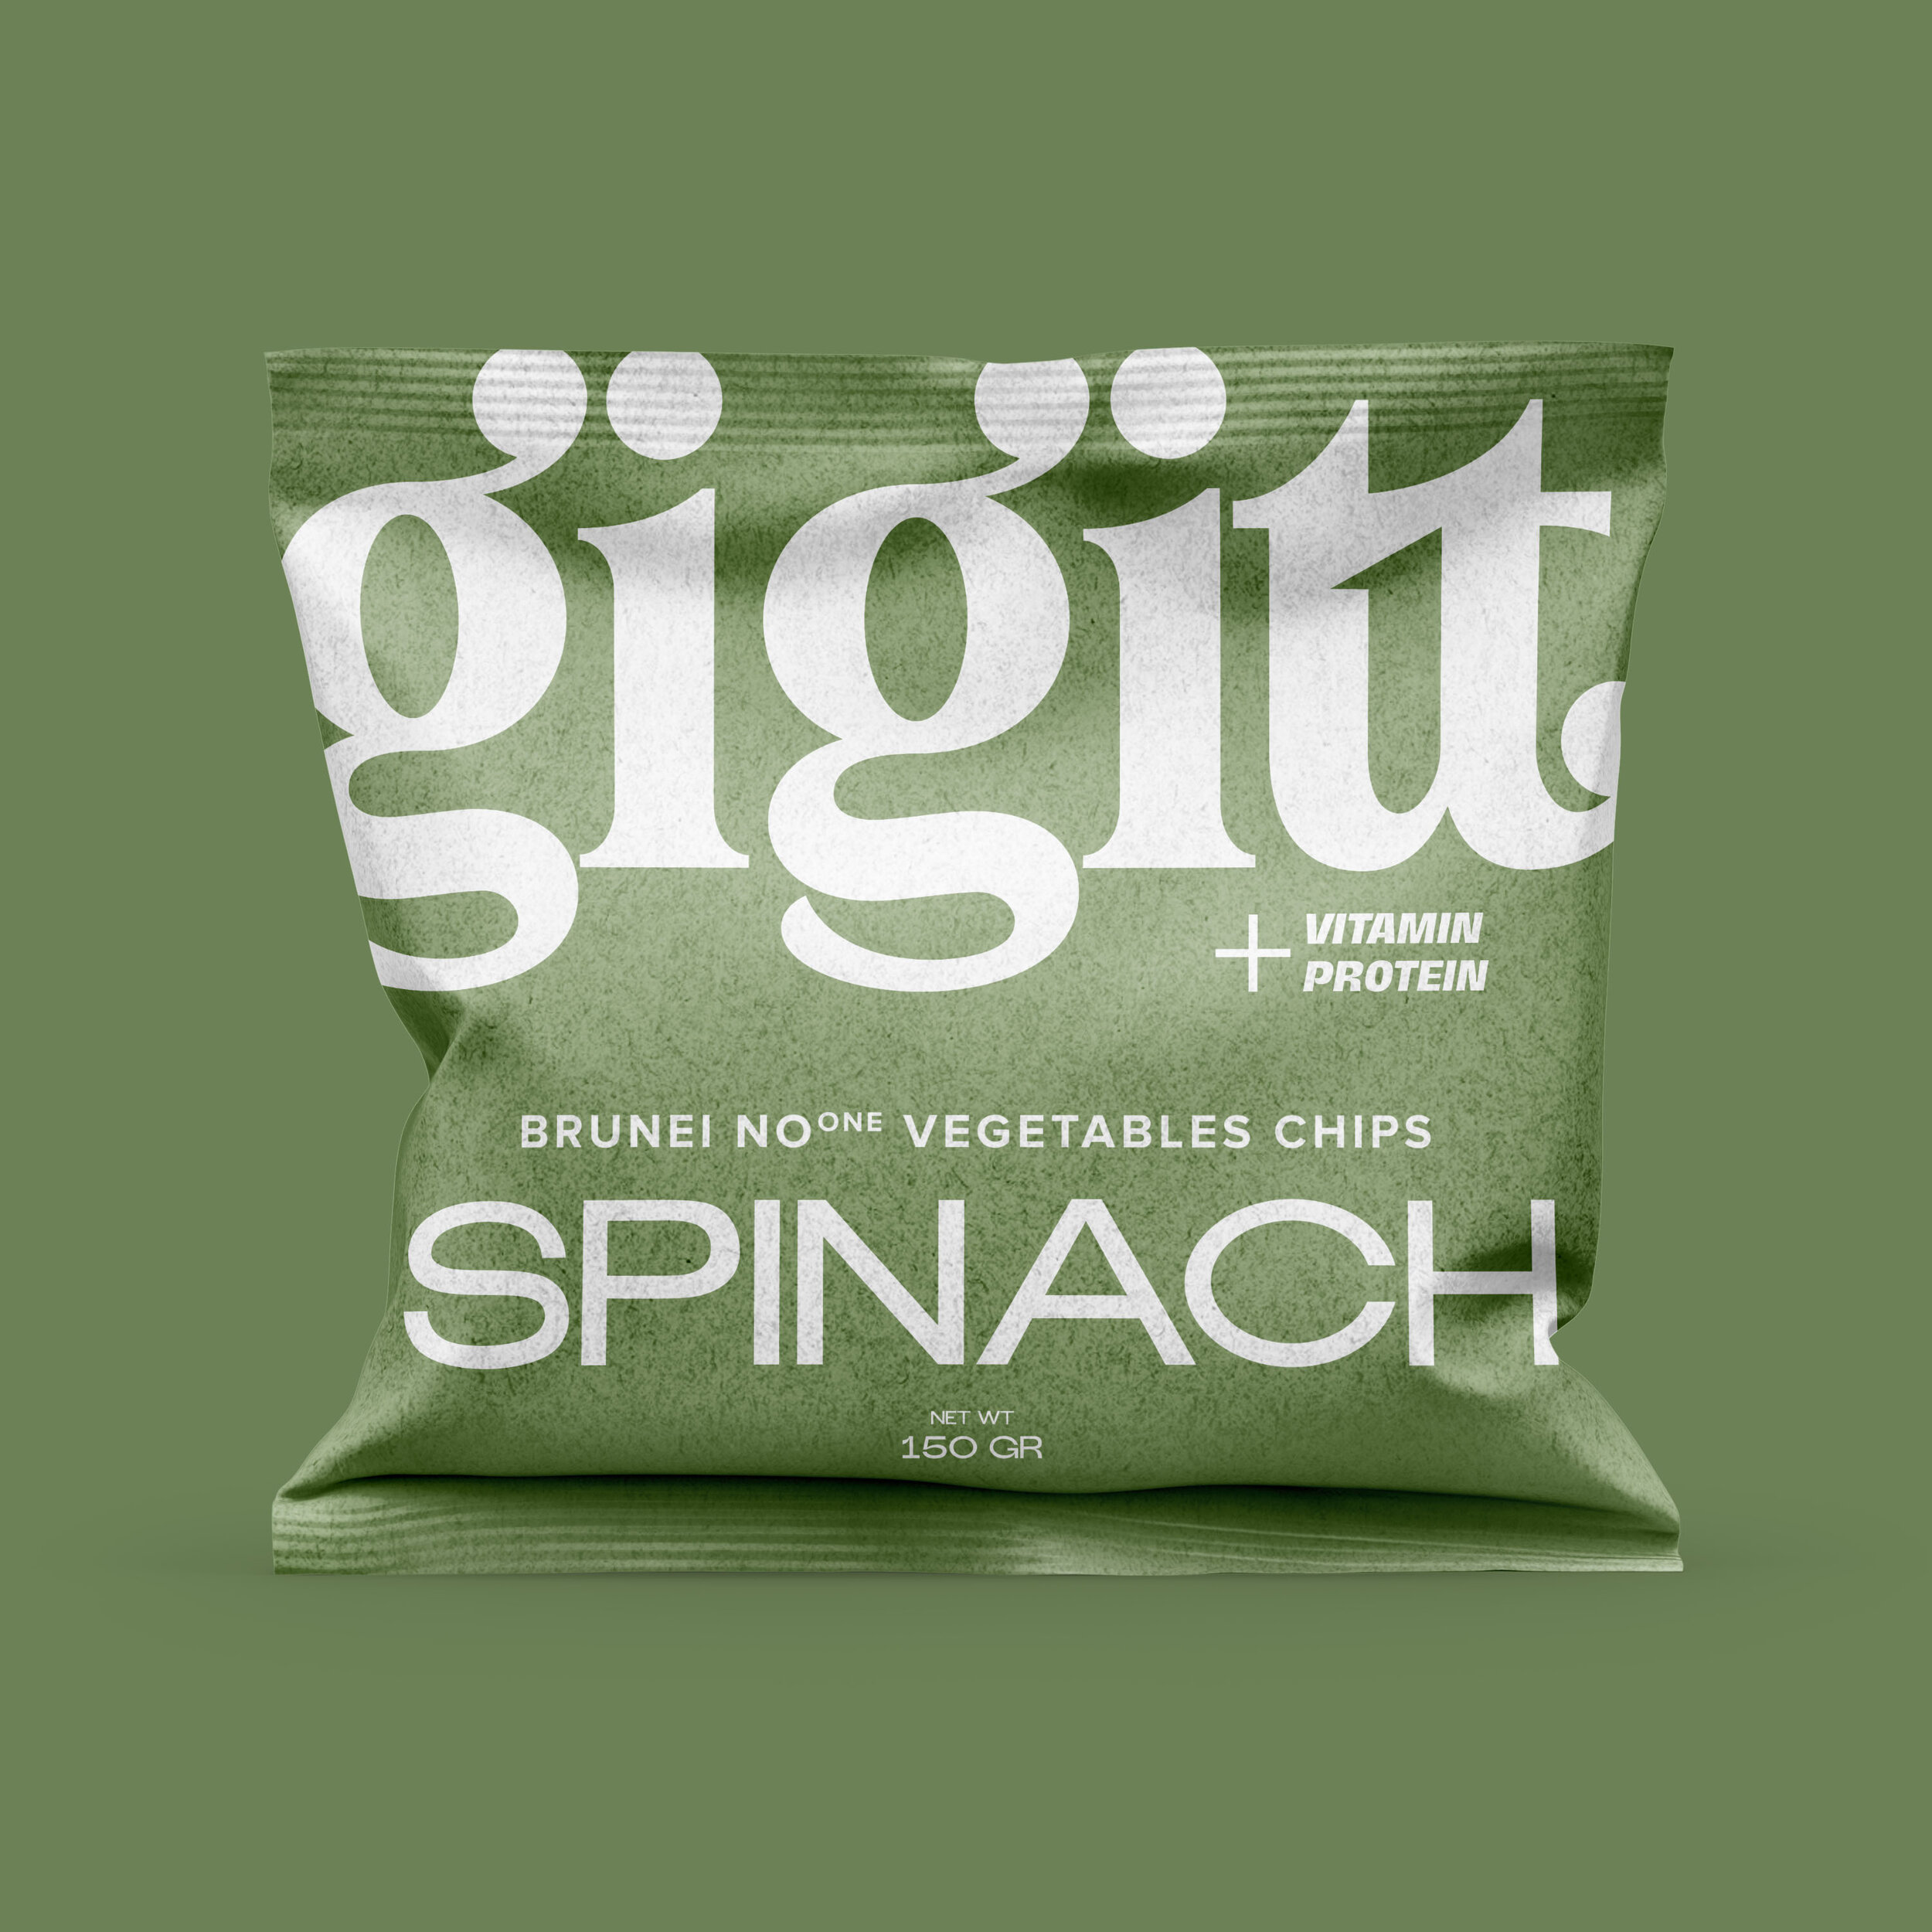 Gigitt Spinach.jpg